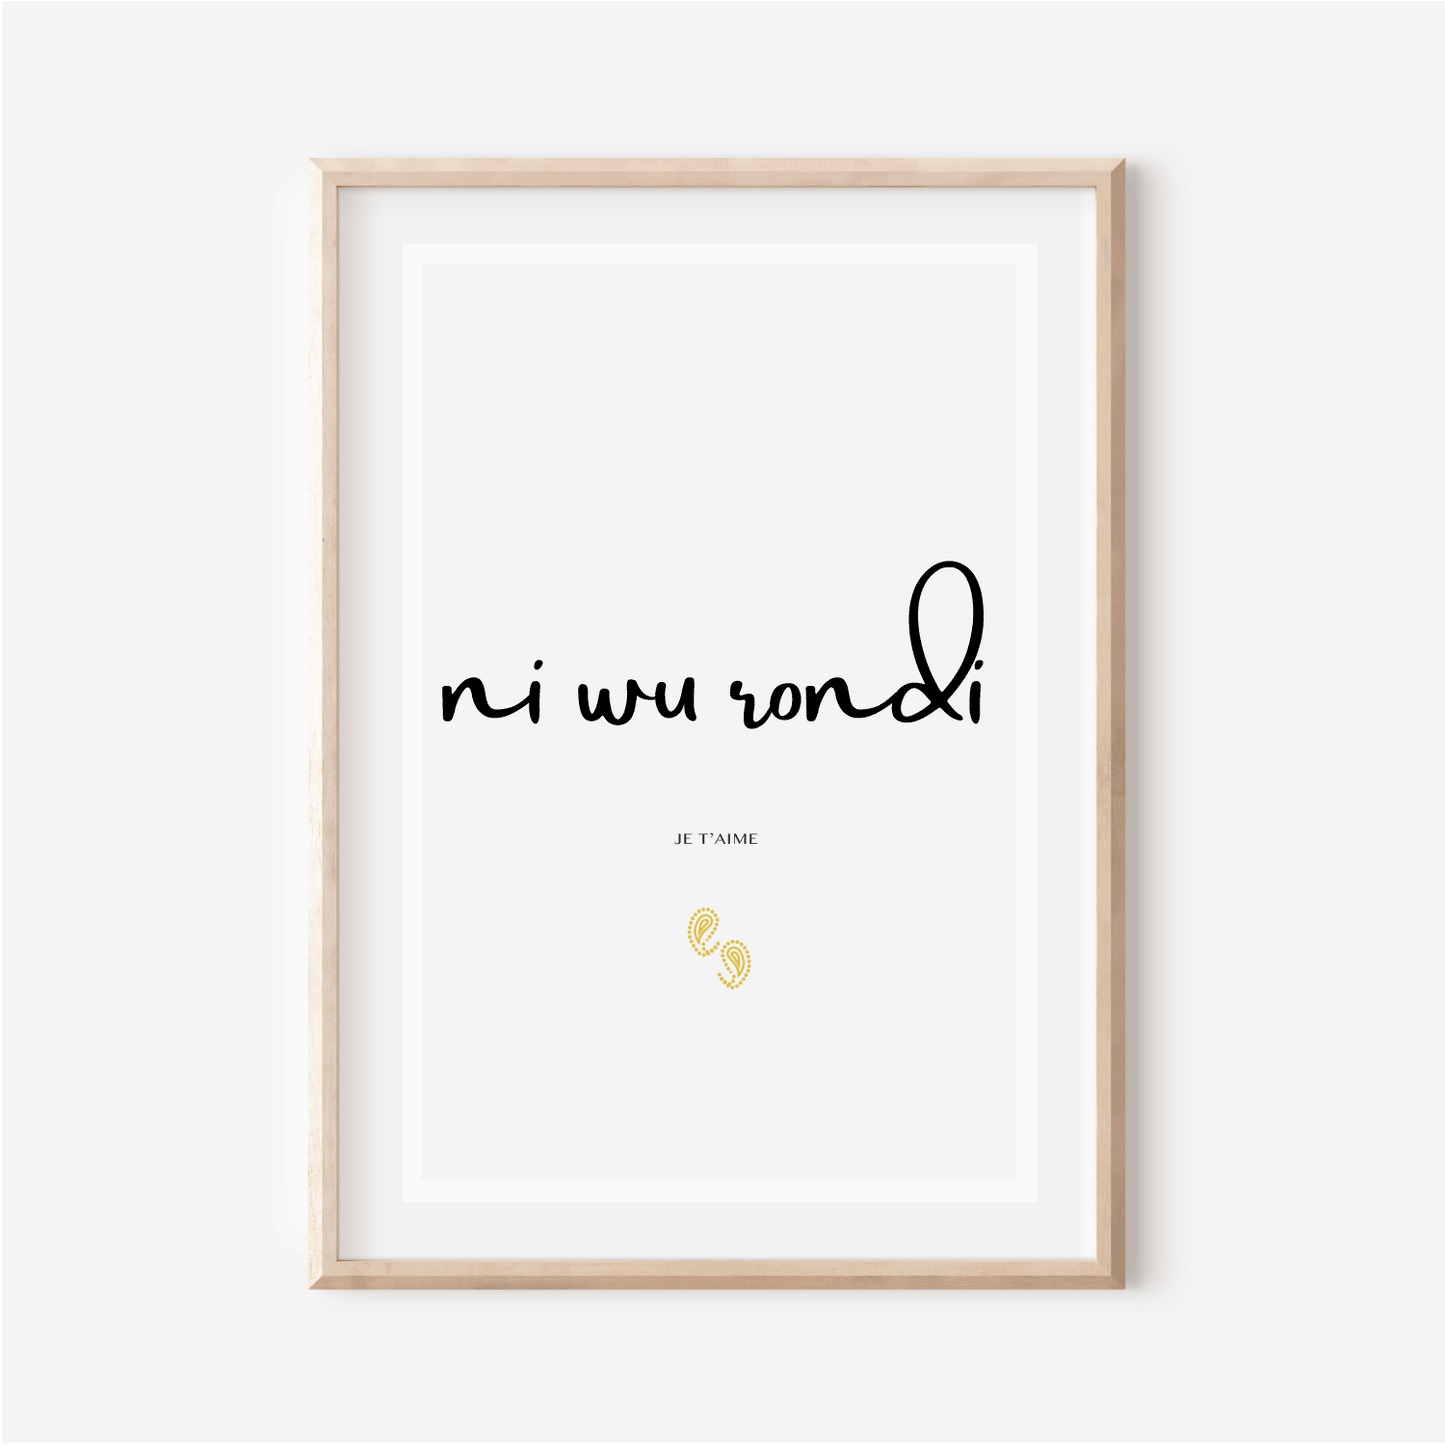 Affiche "Ni wu rondi" - Je t aime en Yipunu - 30x40 cm